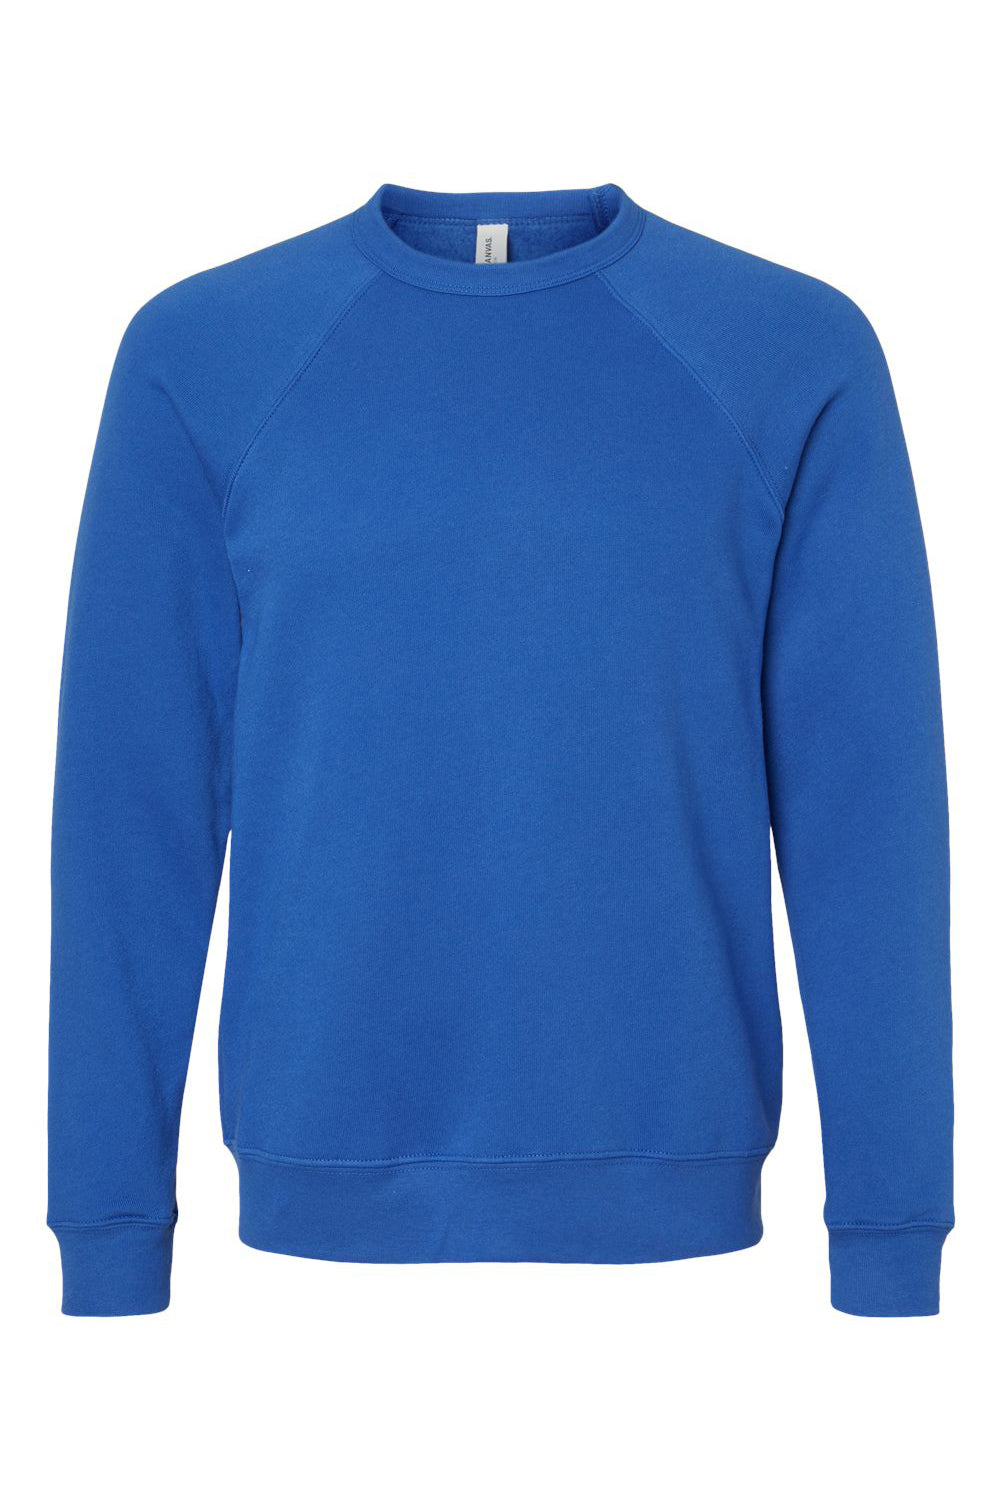 Bella + Canvas BC3901/3901 Mens Sponge Fleece Crewneck Sweatshirt True Royal Blue Flat Front